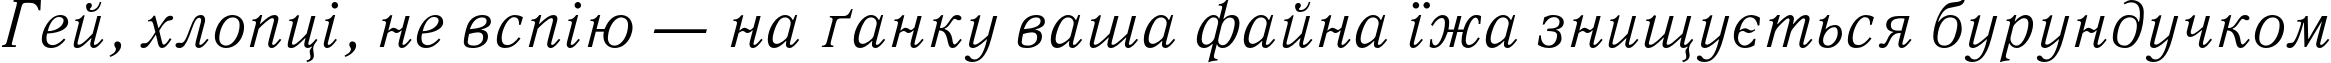 Пример написания шрифтом QuantAntiquaC Italic текста на украинском